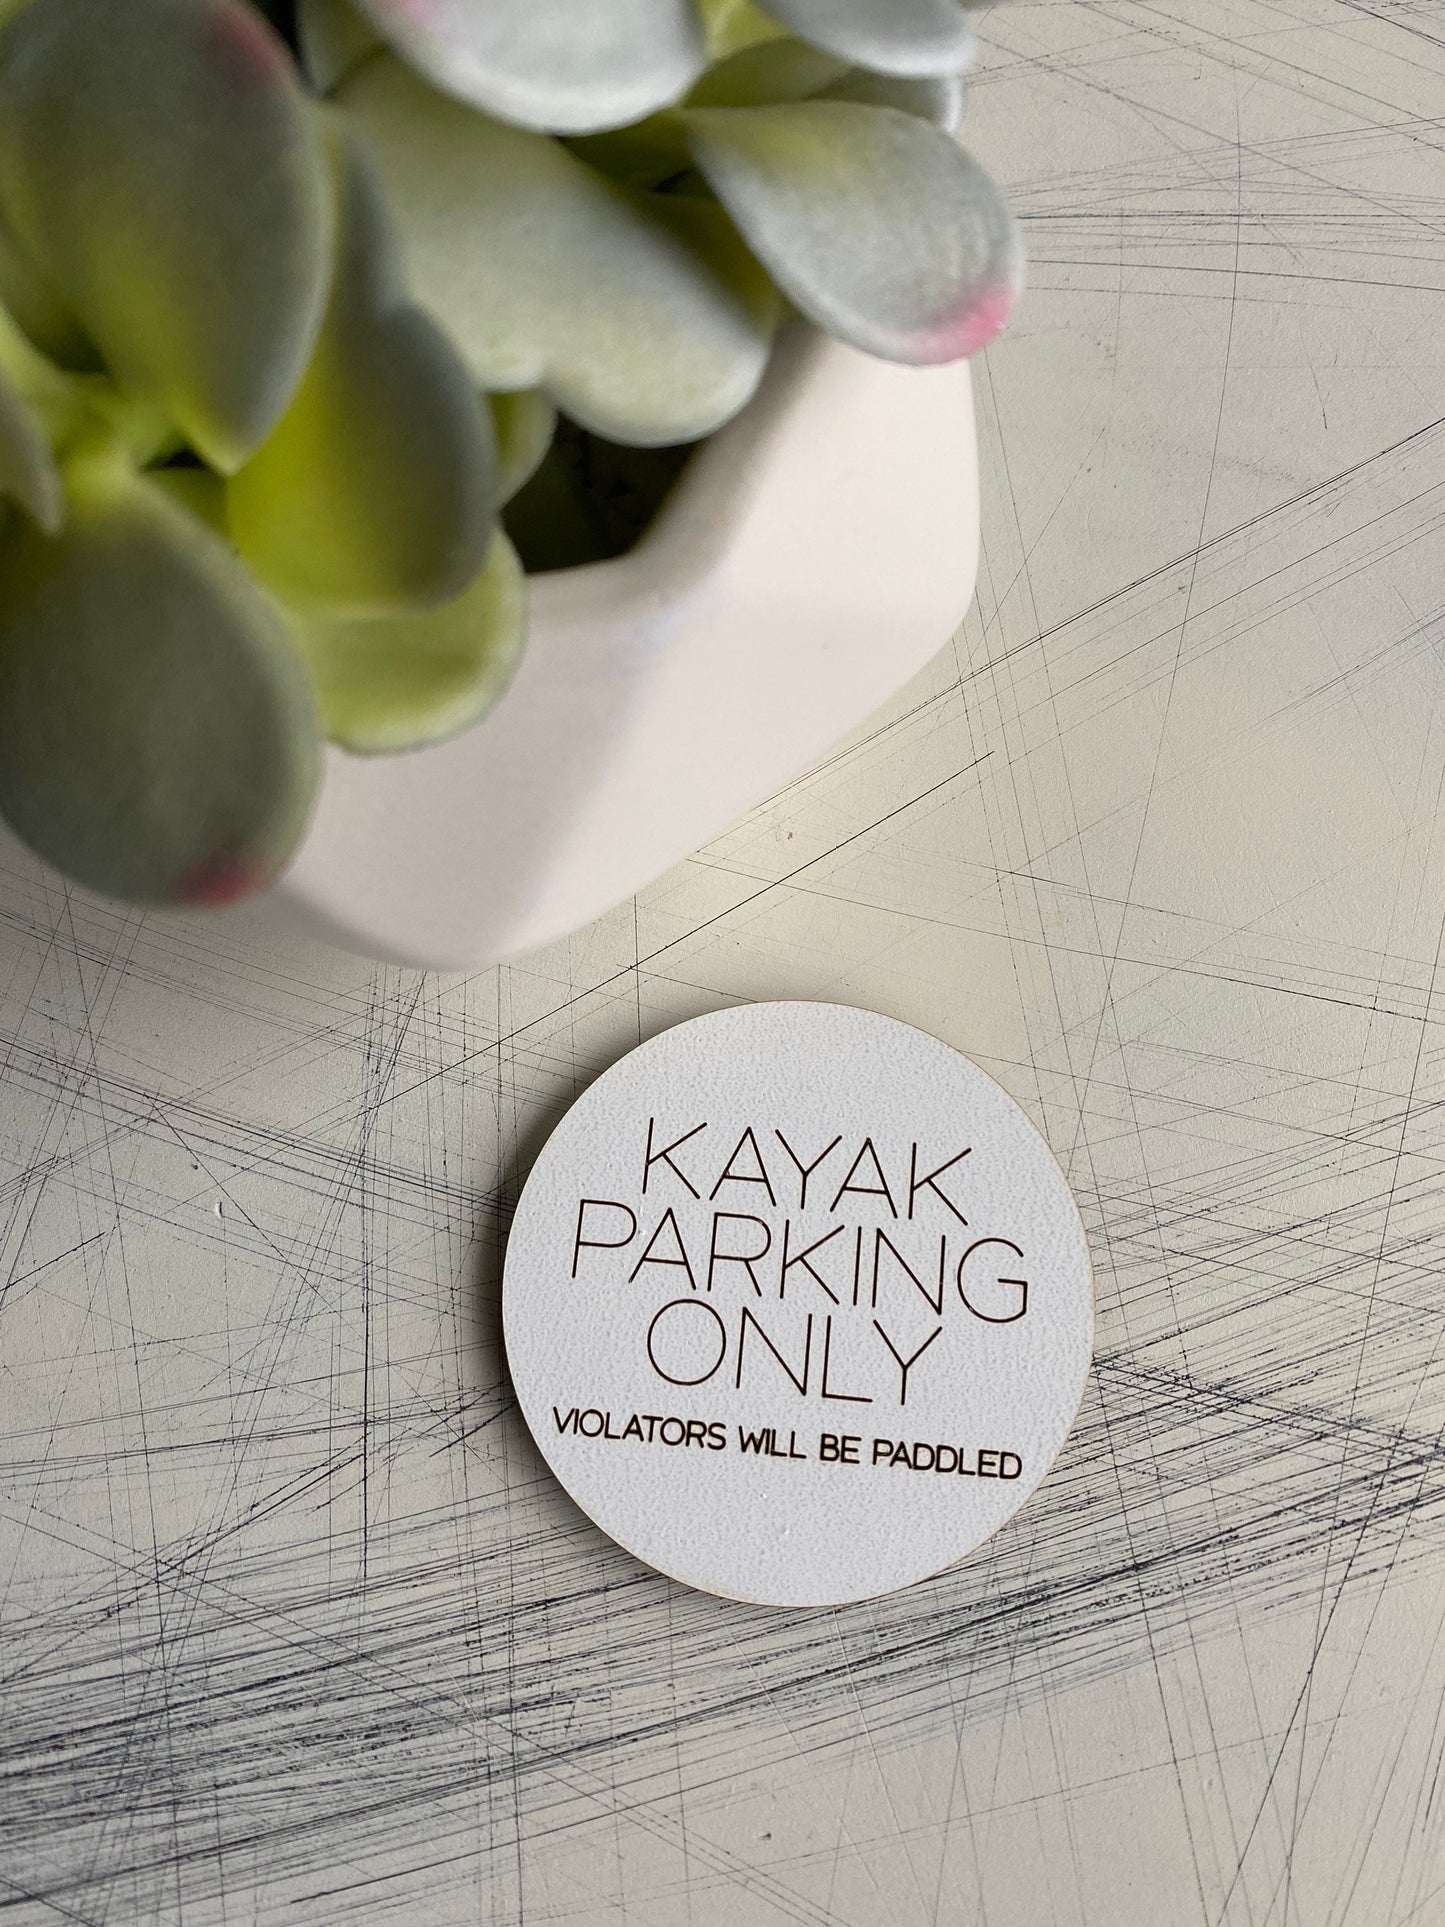 Kayak parking only - violators will be paddled - engraved wood magnet